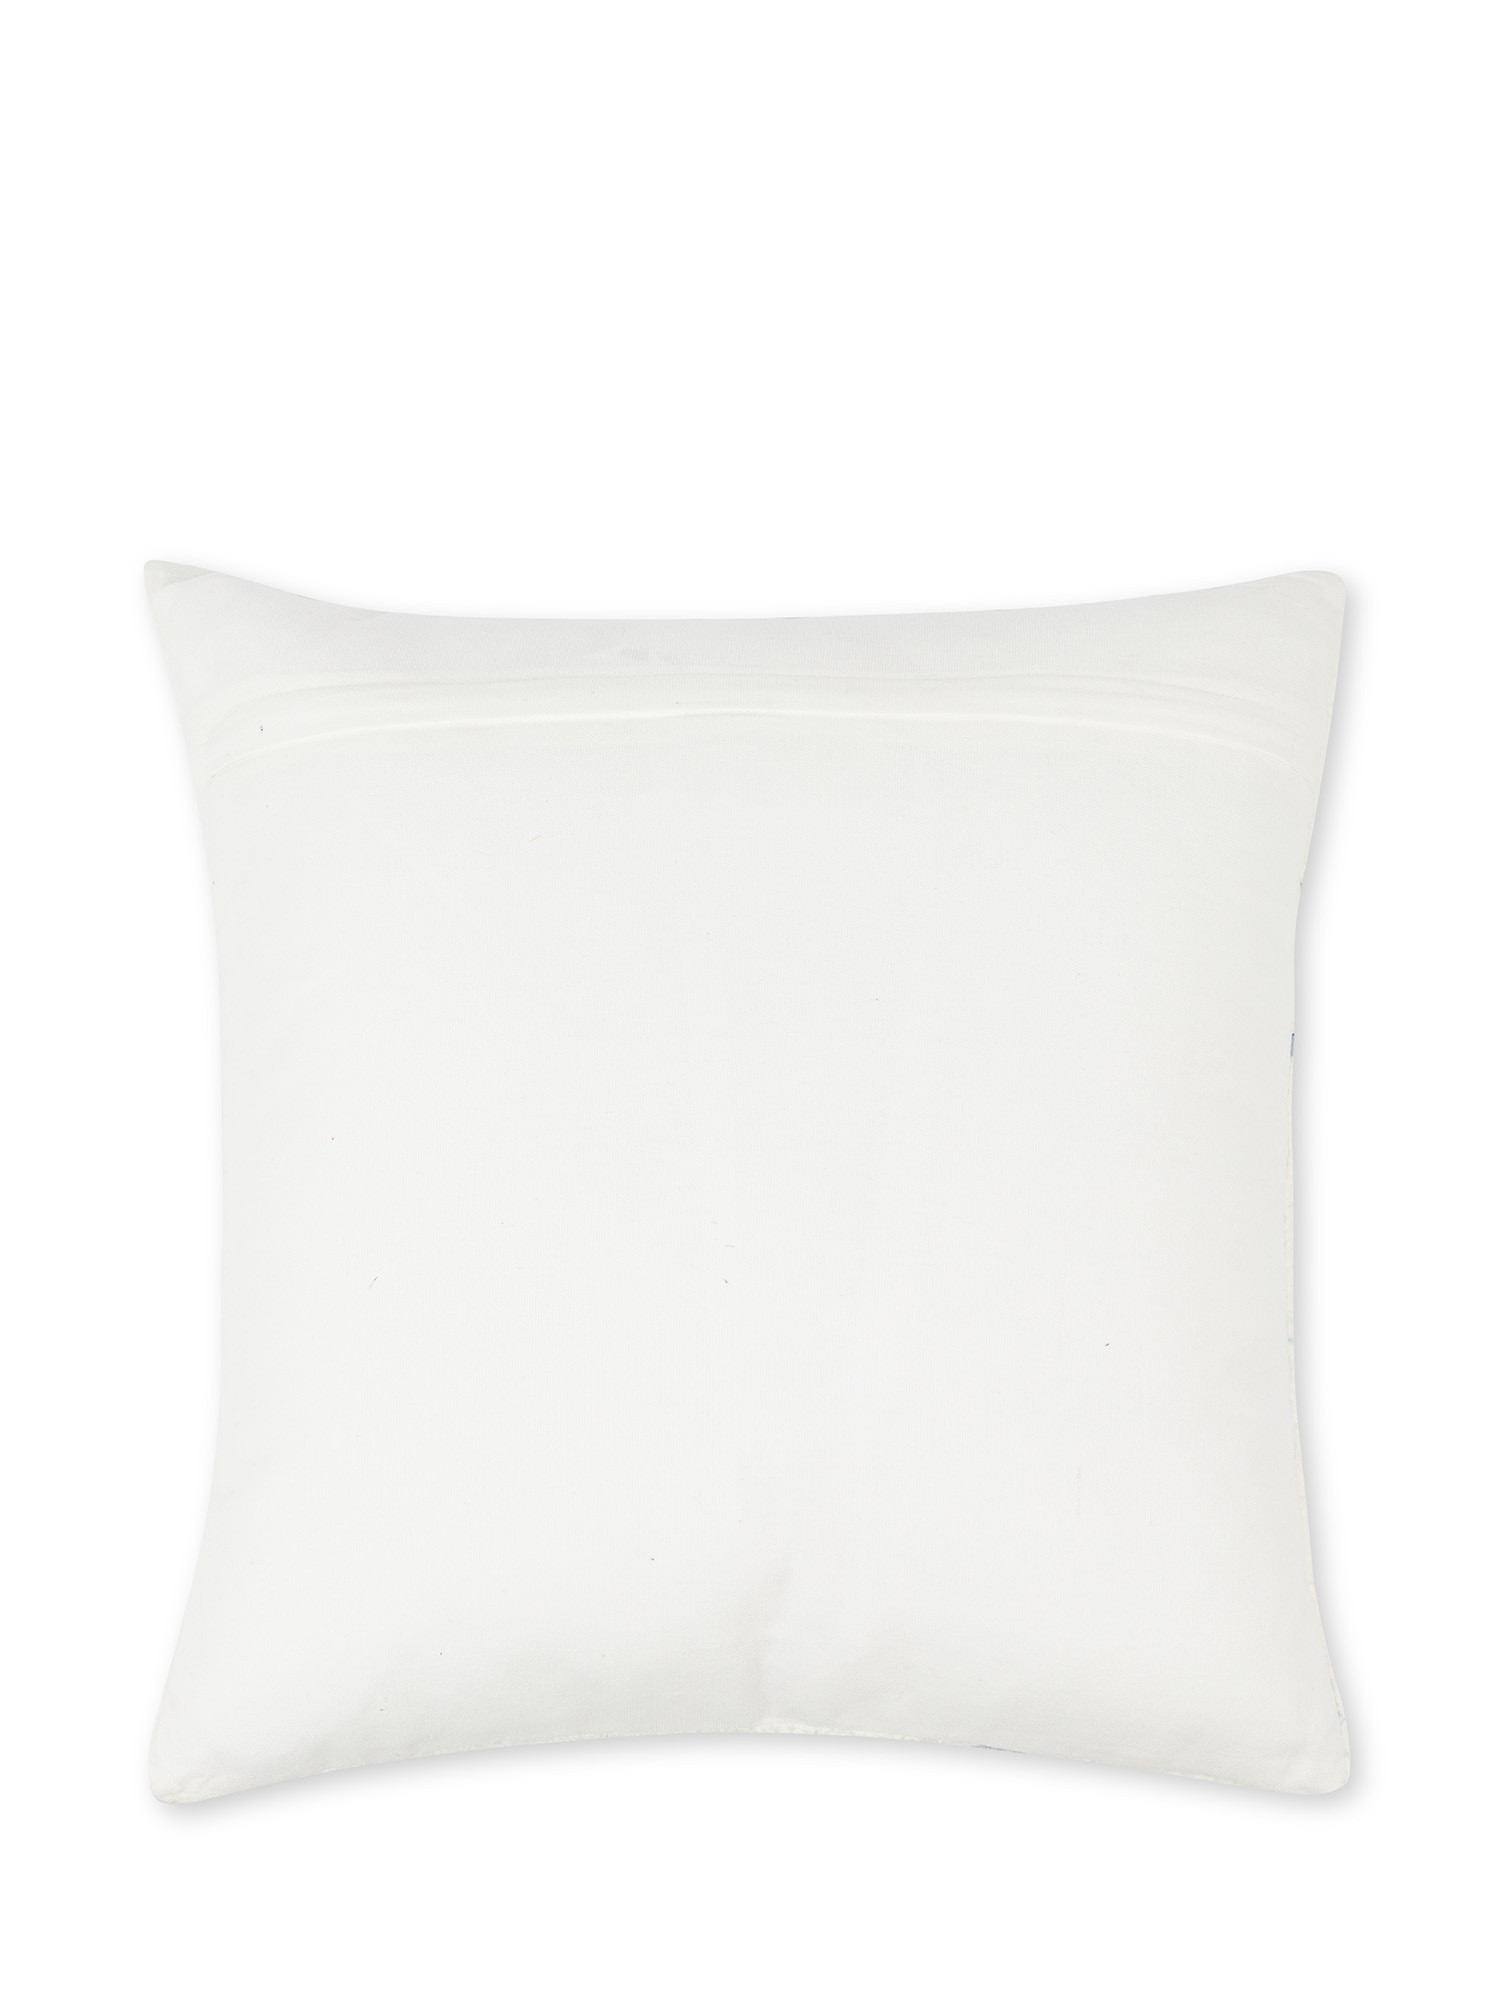 Cuscino tessuto sherpa ricamato 45x45cm, Bianco, large image number 1